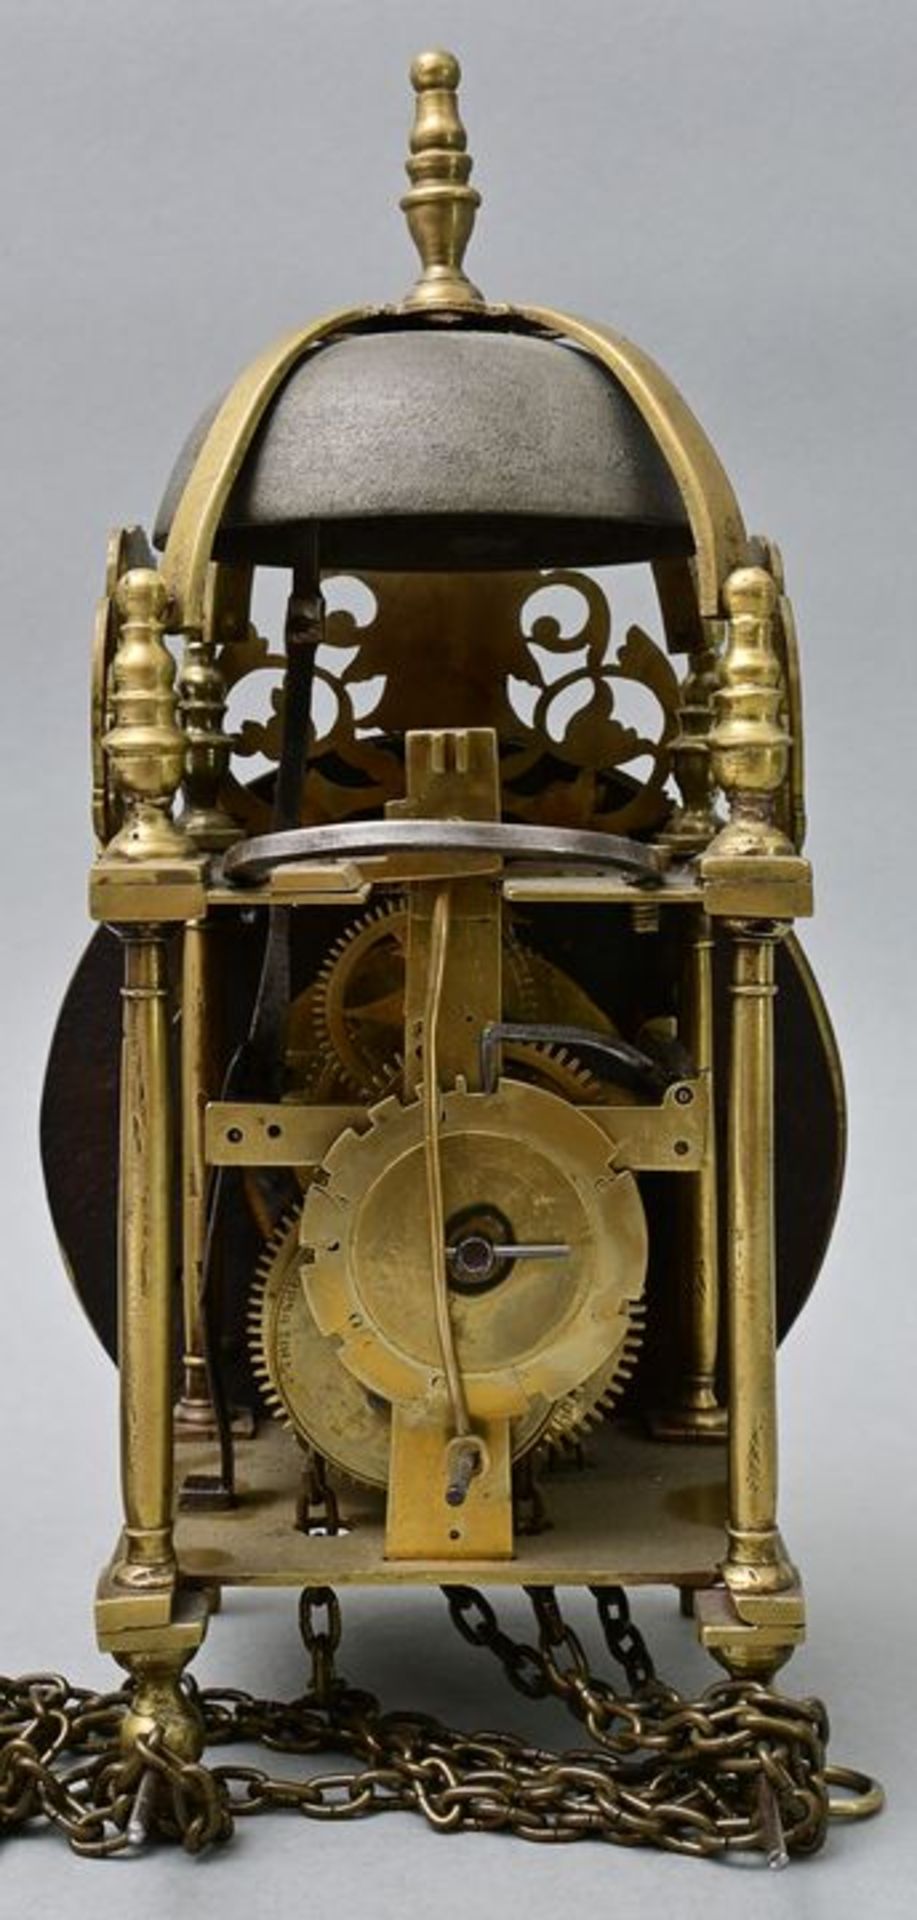 Laternenuhr/ lantern clock - Image 2 of 5